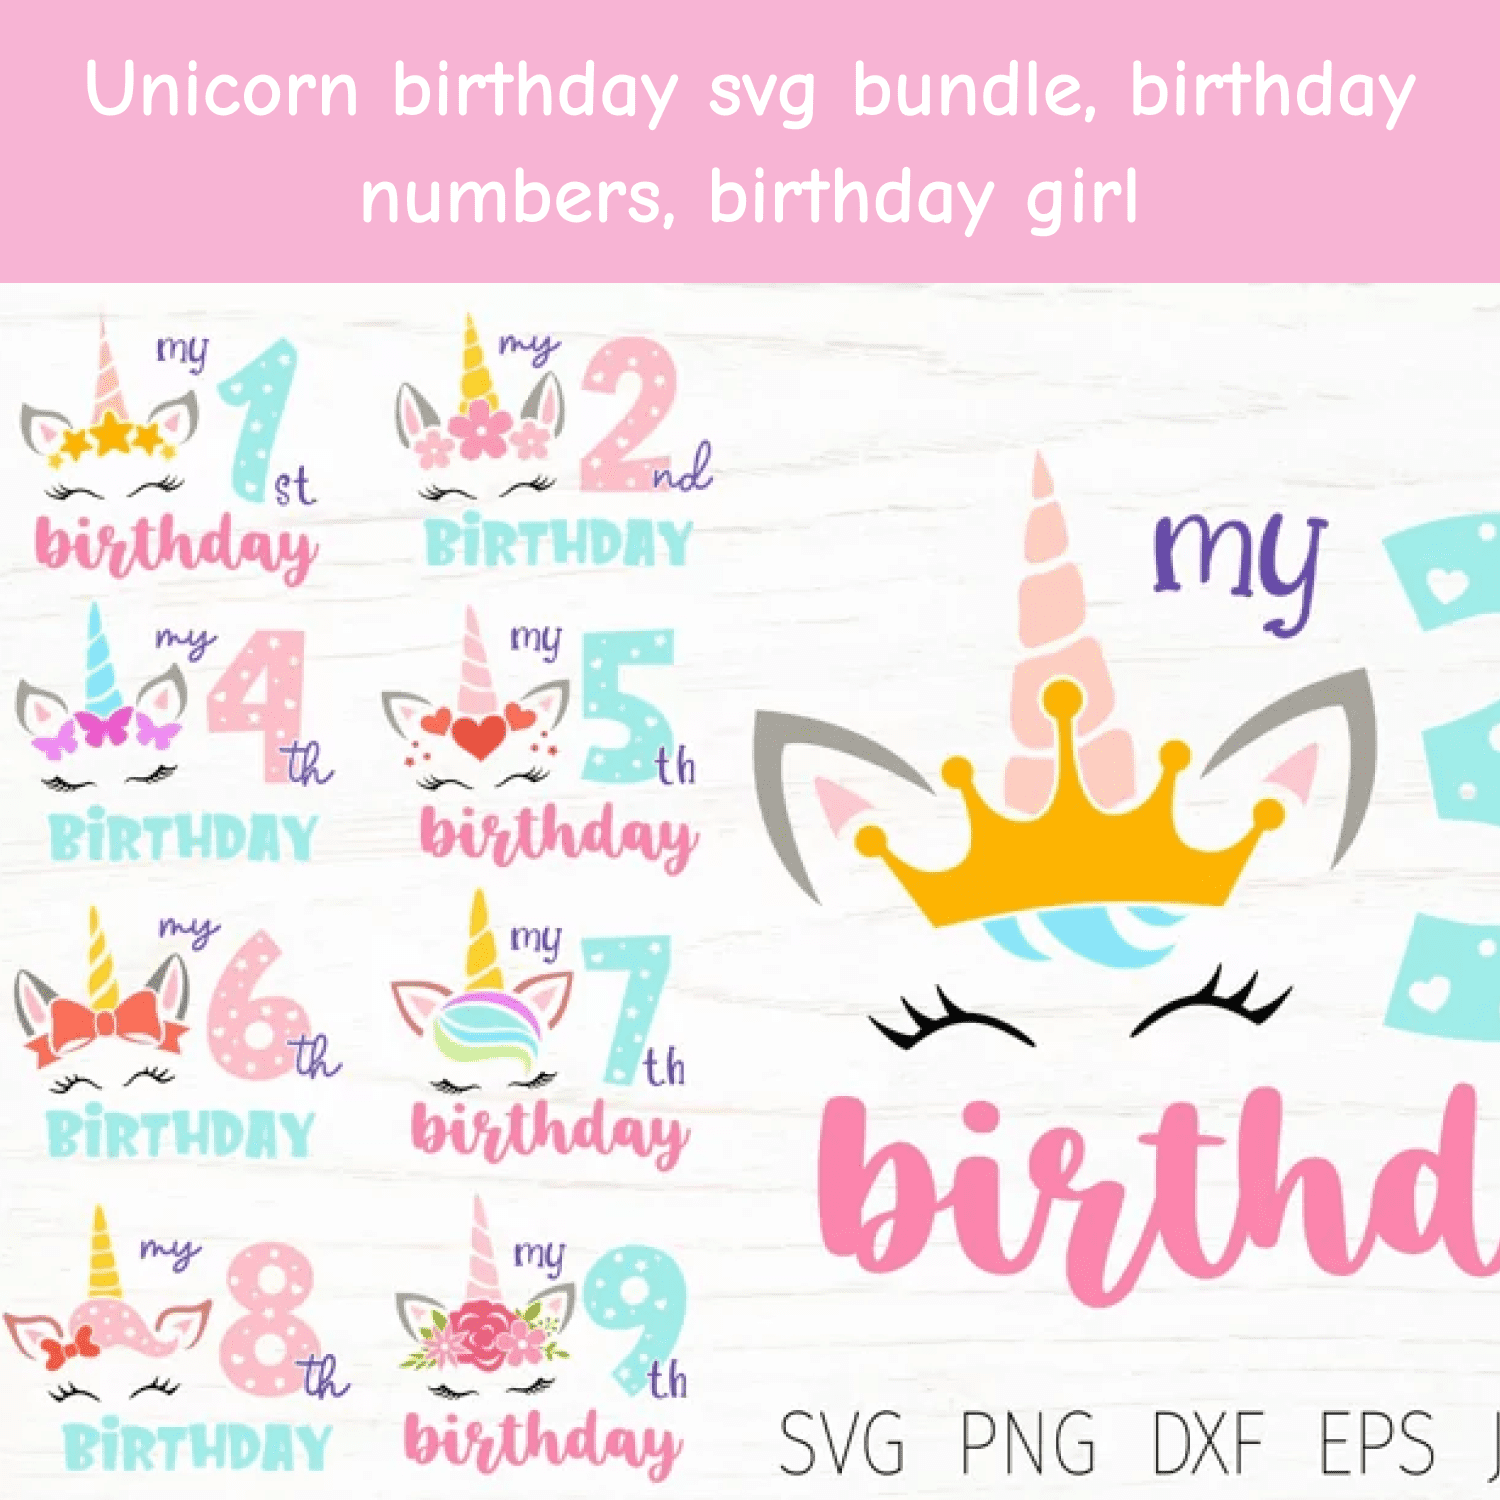 Unicorn birthday svg bundle, birthday numbers, birthday girl cover.